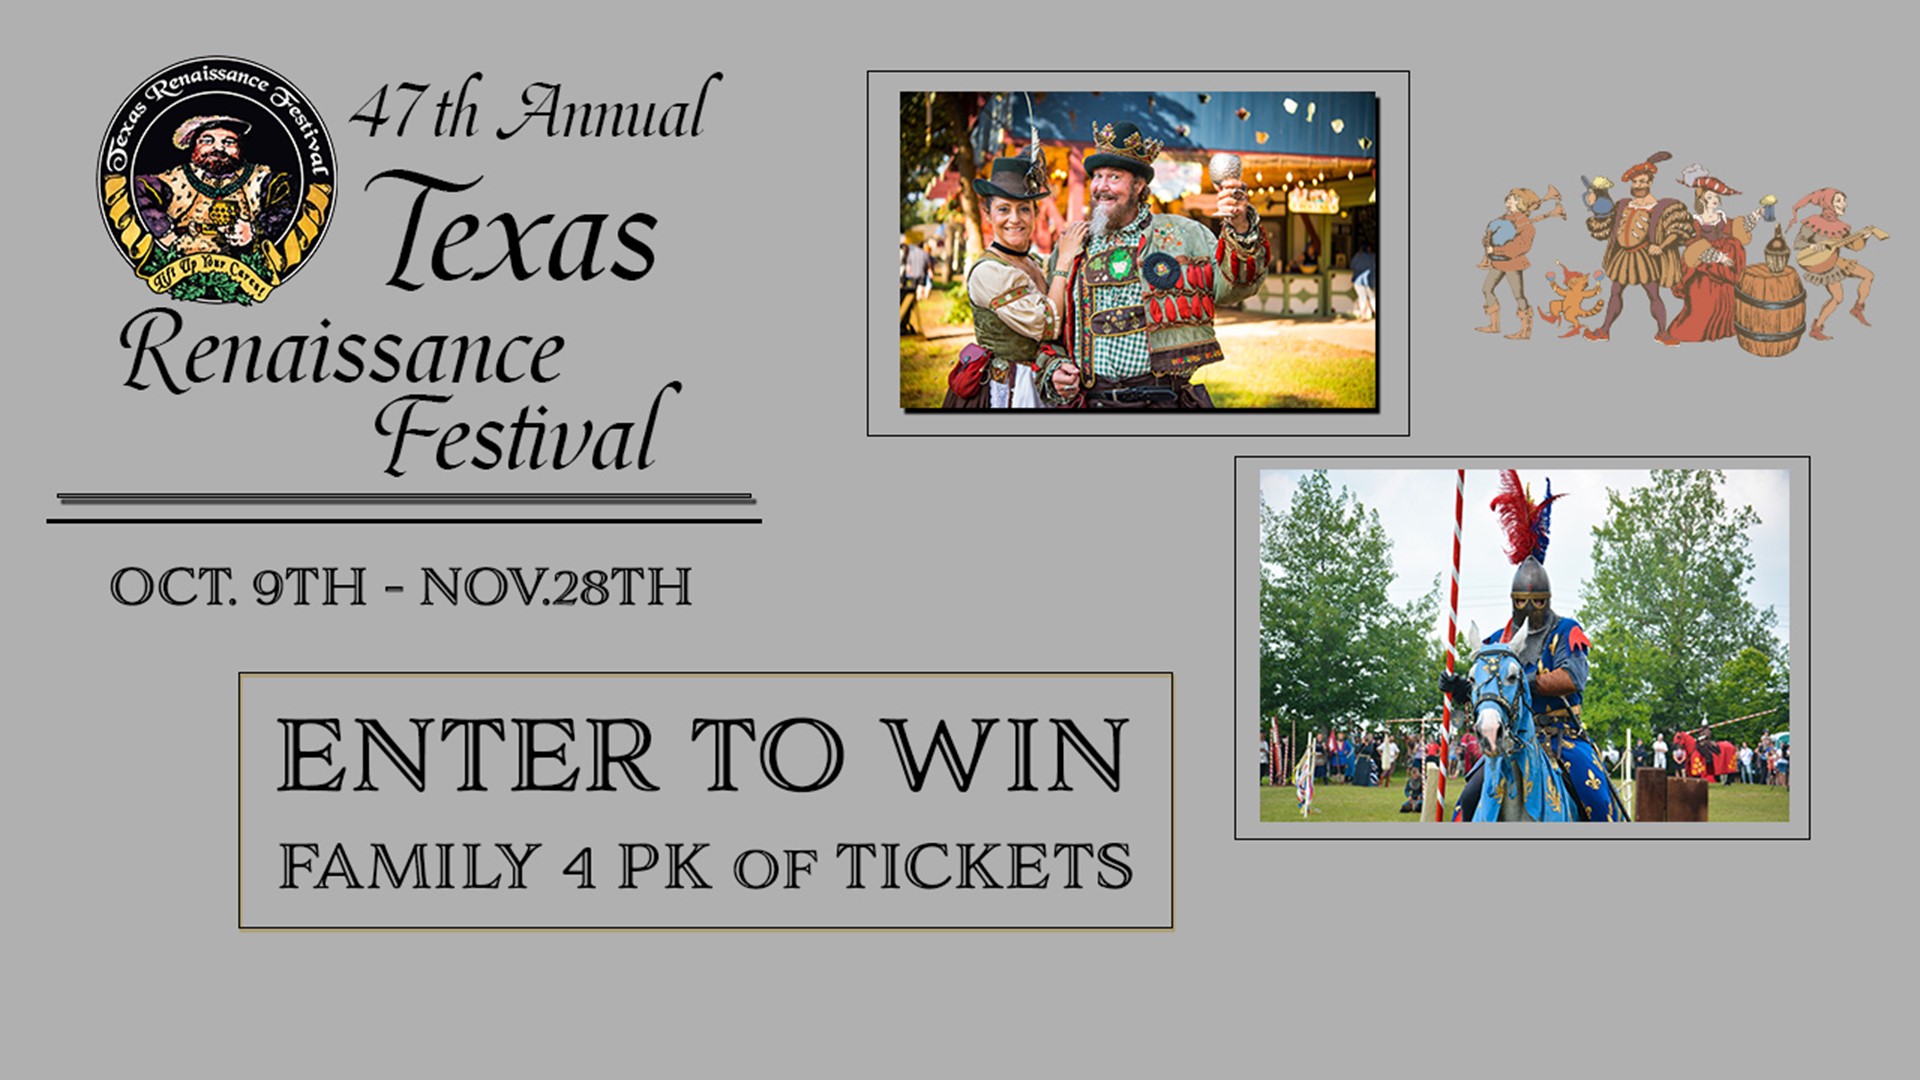 Win tickets to Texas Renaissance Festival